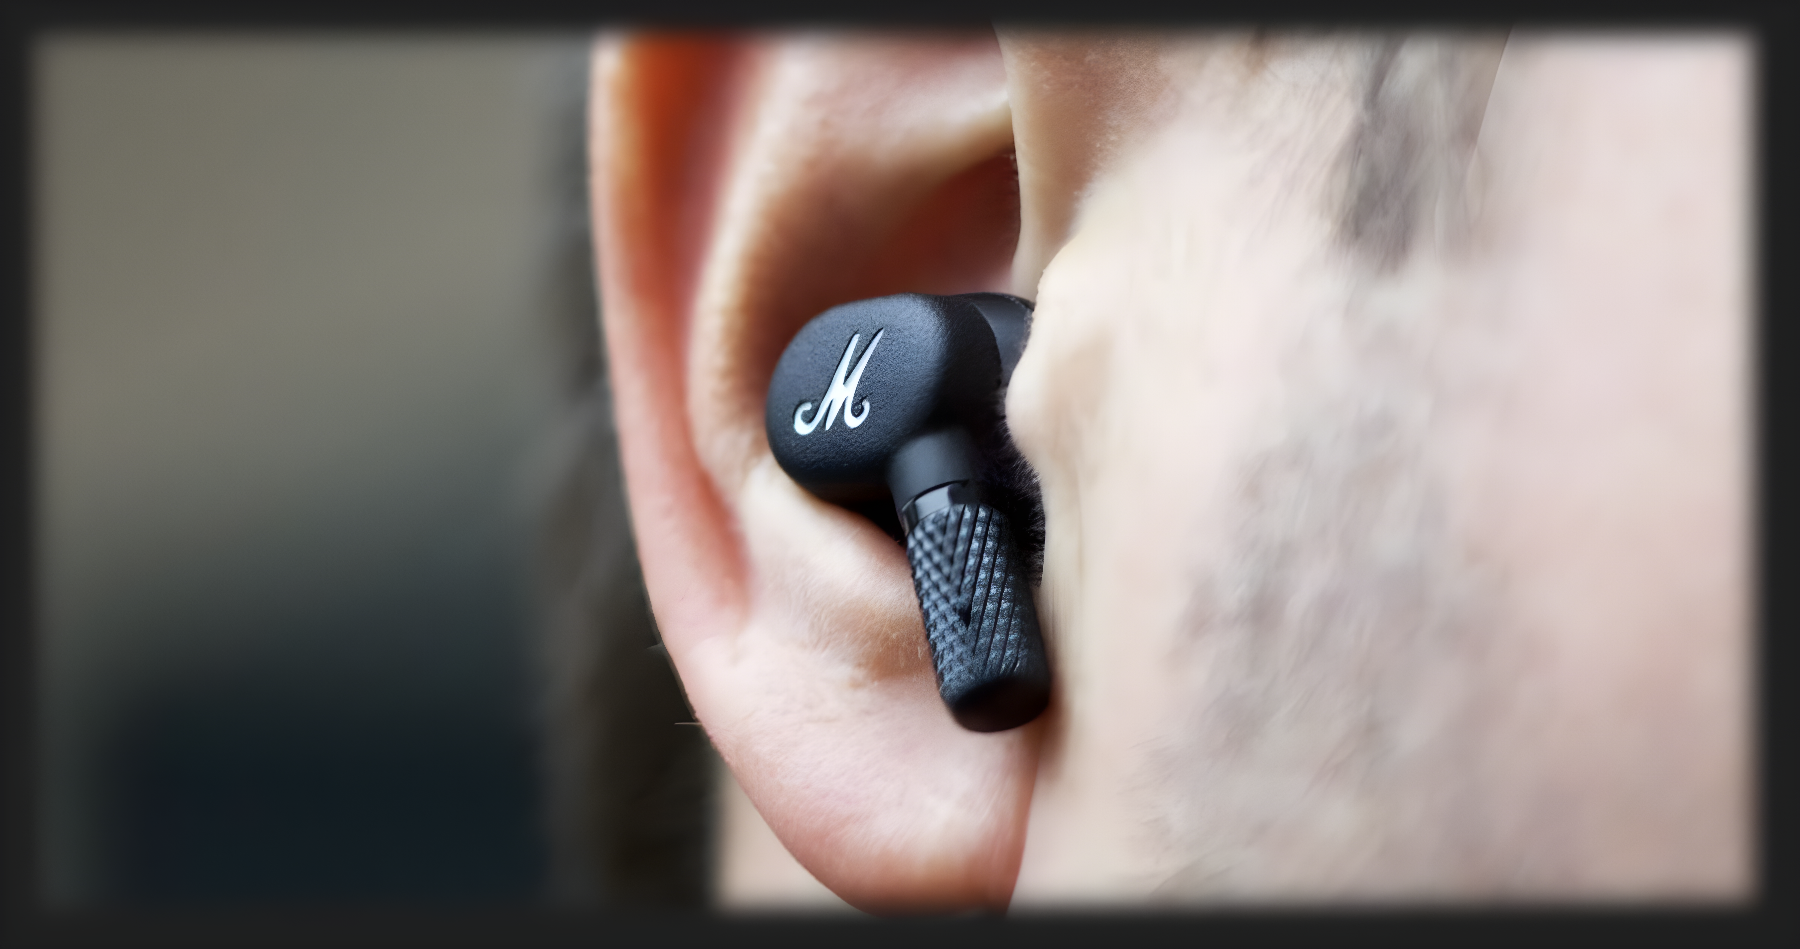 Навушники Marshall Headphones Motif II ANC (Black)